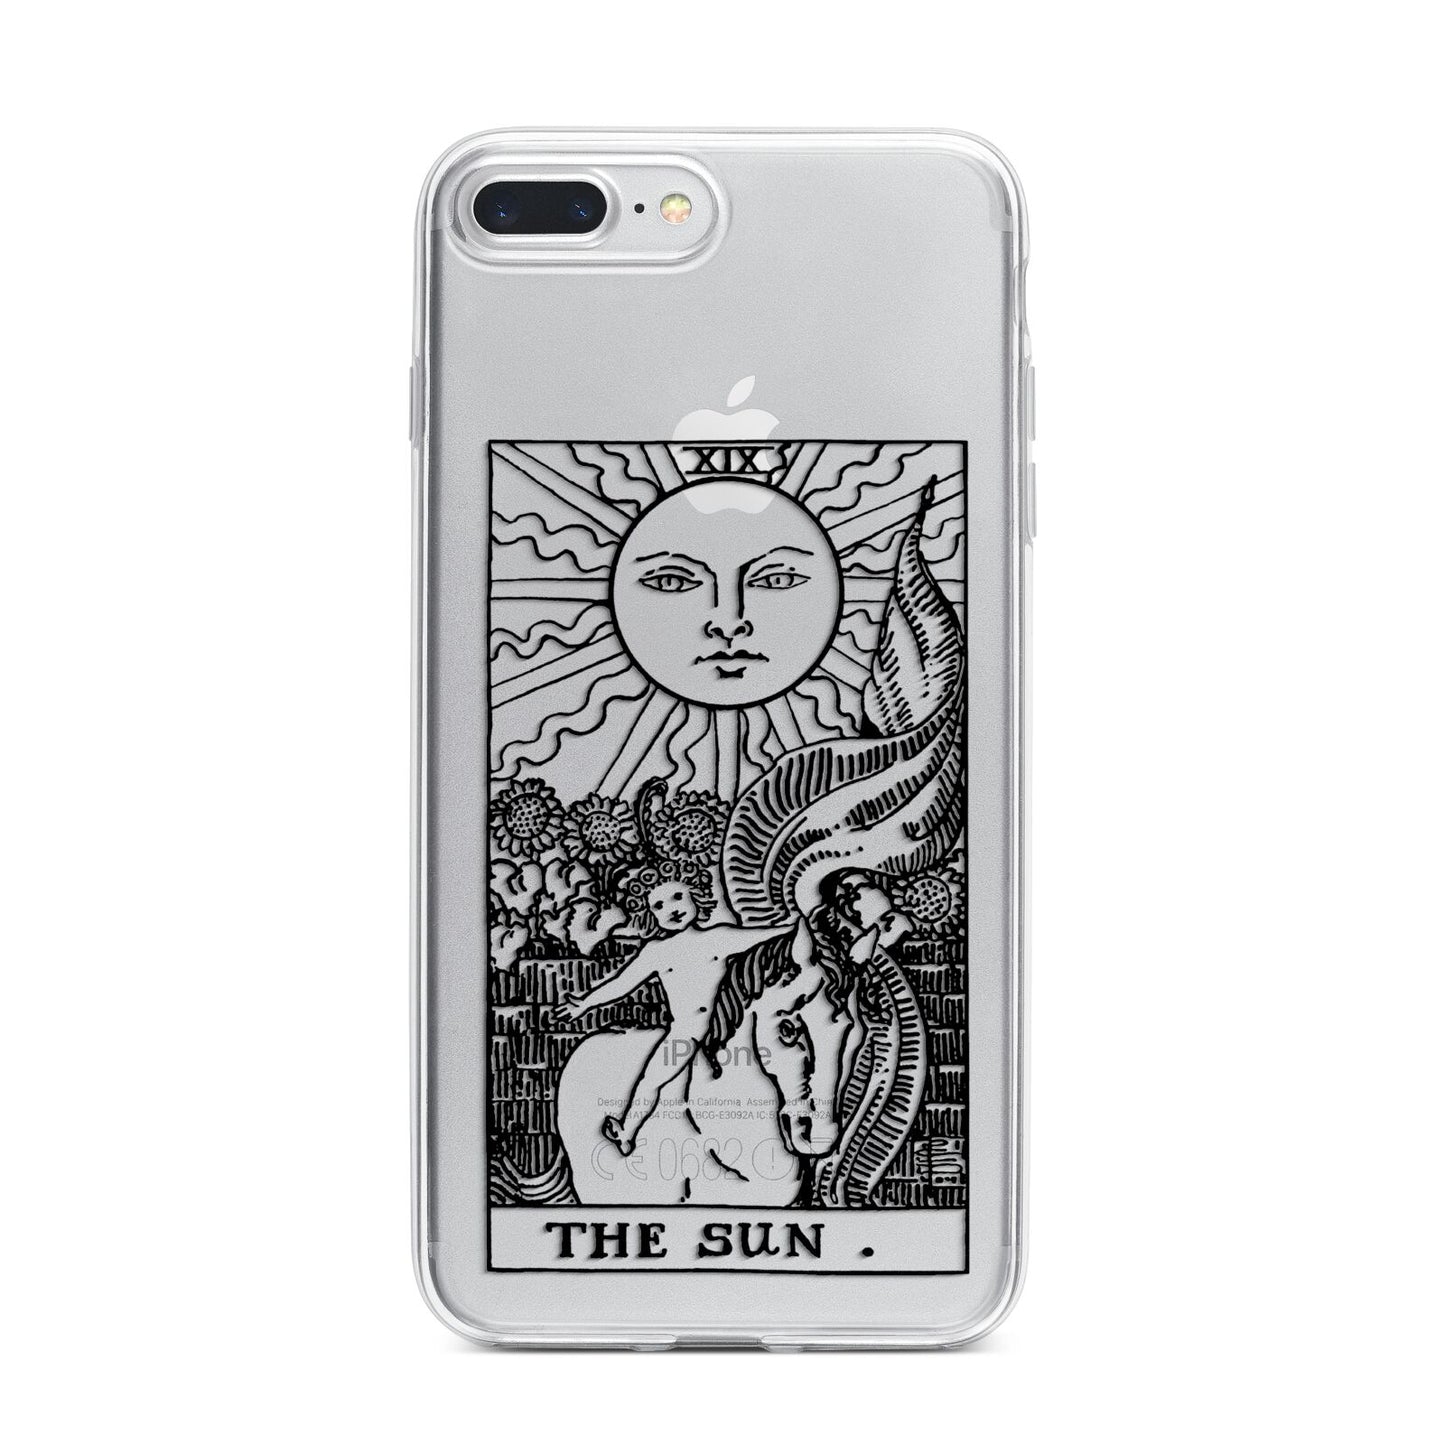 The Sun Monochrome iPhone 7 Plus Bumper Case on Silver iPhone